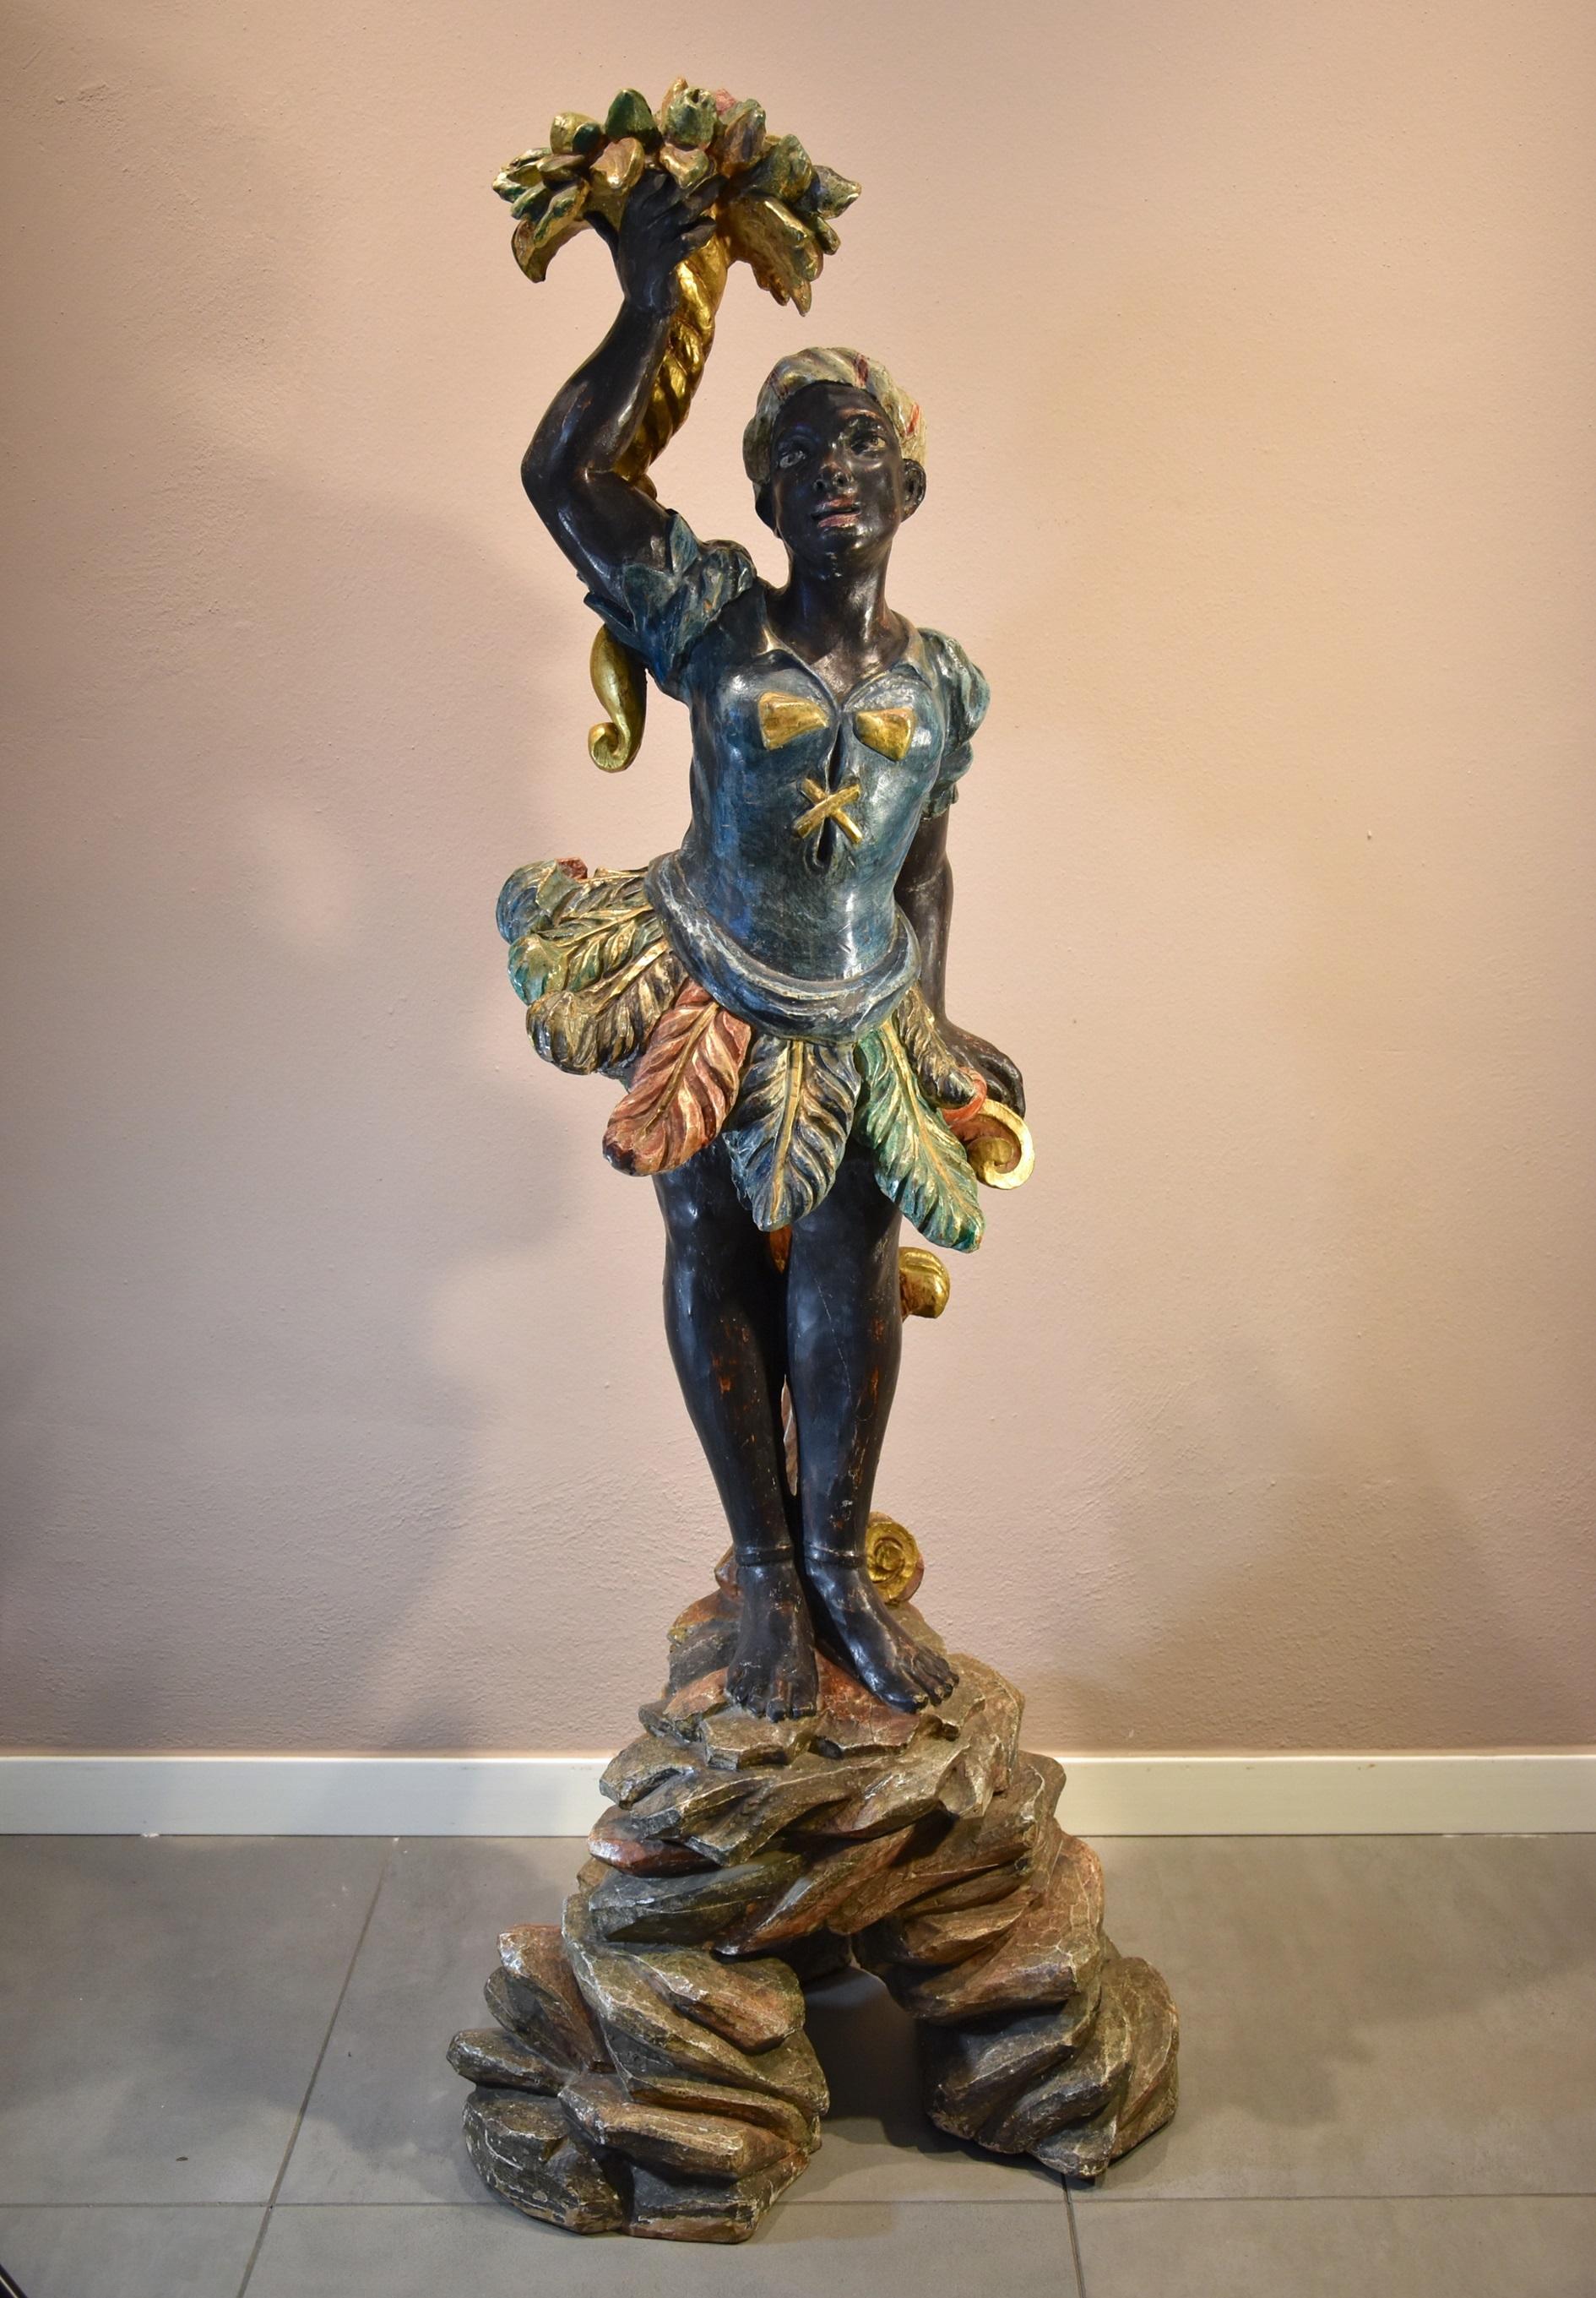 Venezianische Schwarzmoor-Skulptur aus Holz, Venedig, 18. Jahrhundert  (Alte Meister), Sculpture, von Venice, early 18th century